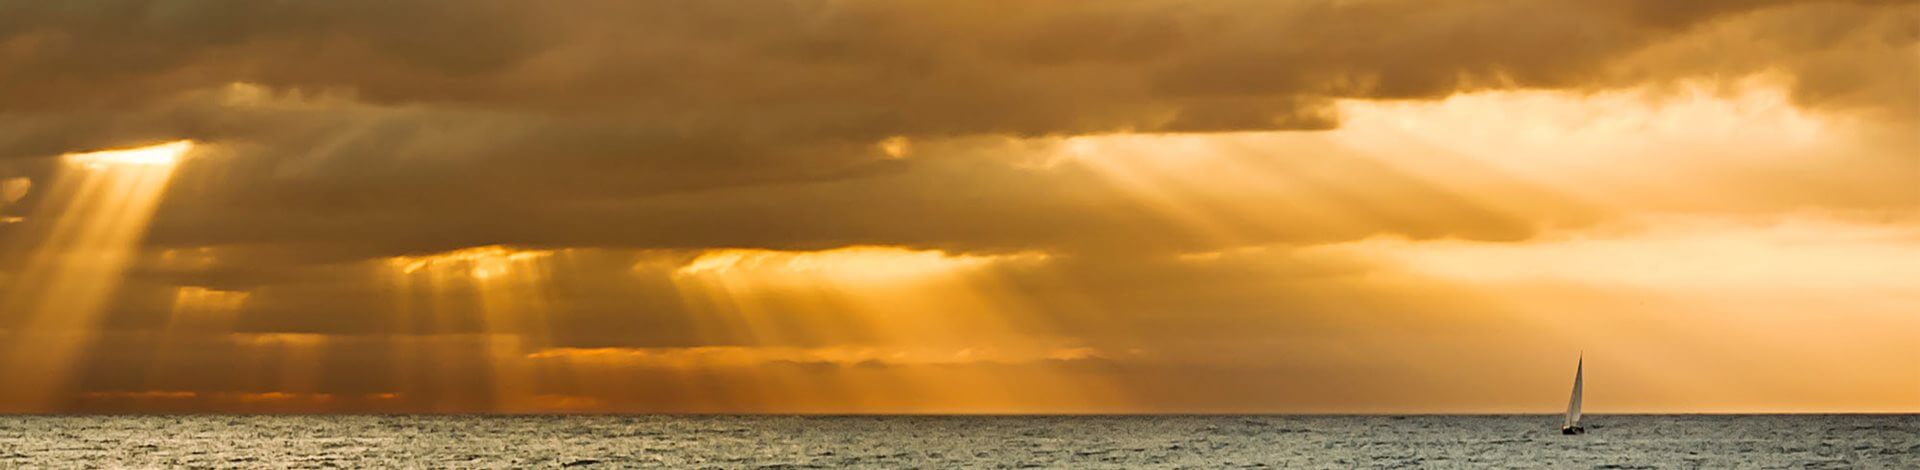 Sun rays shining through clouds onto the ocean